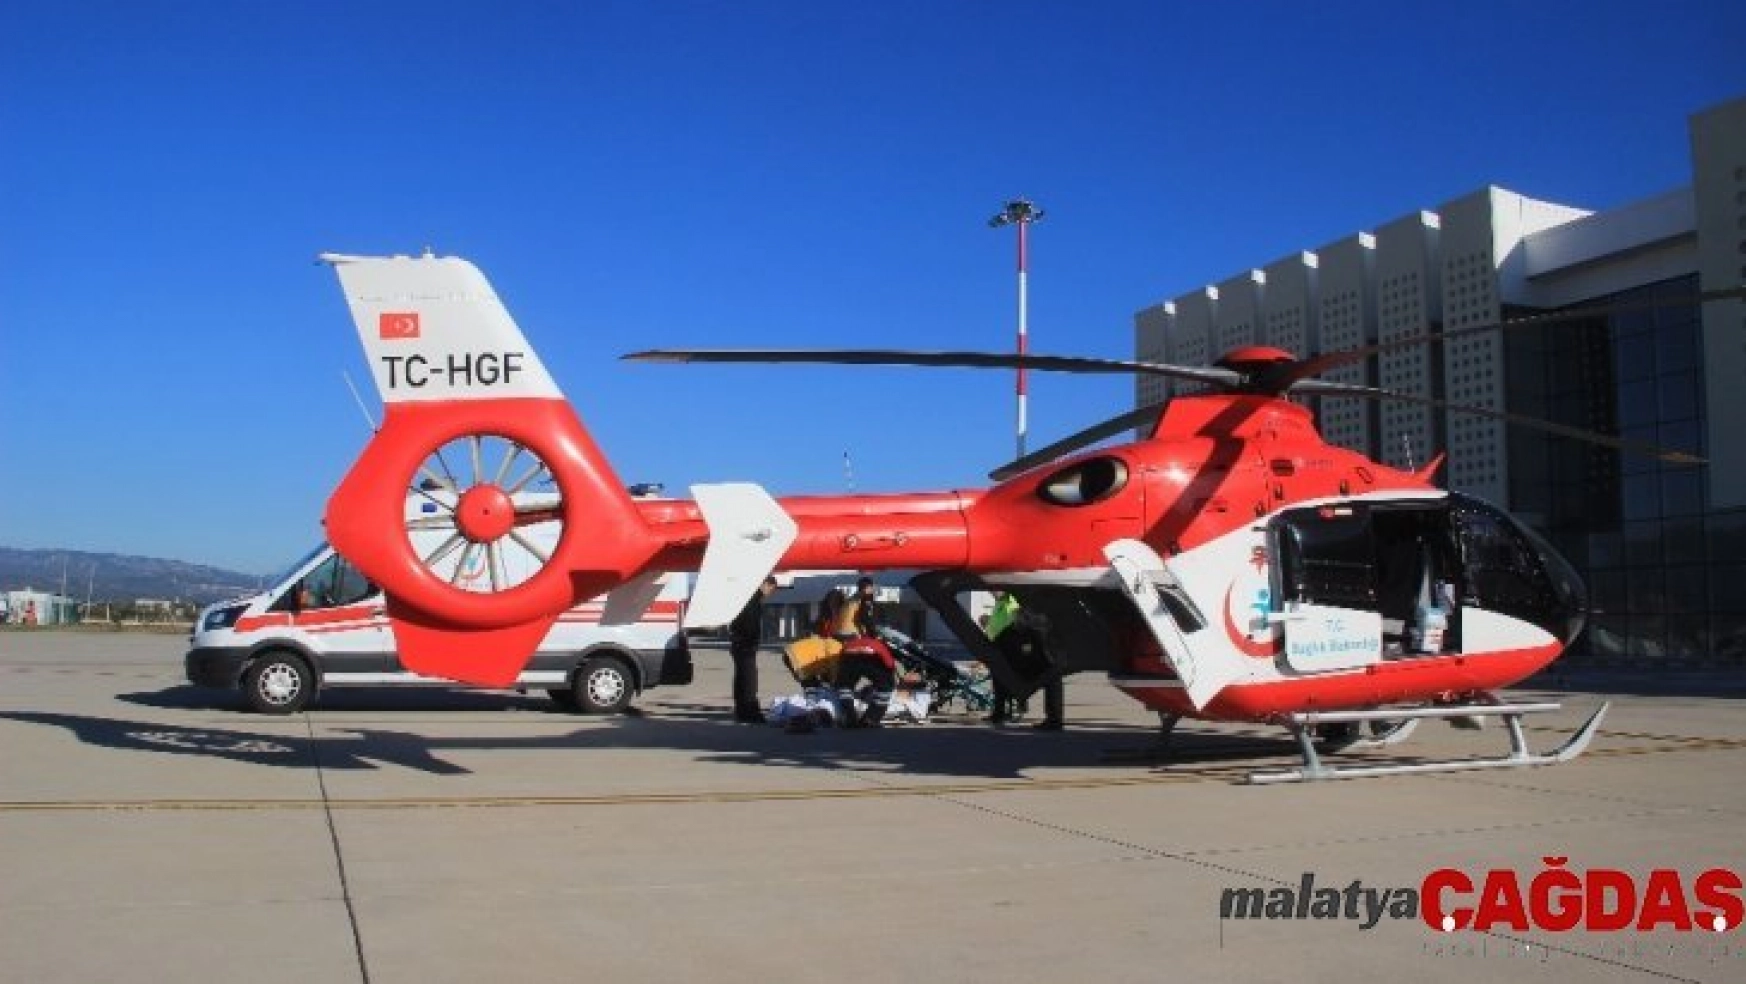 Septik şok geçiren hastaya helikopter ambulans ile sevk